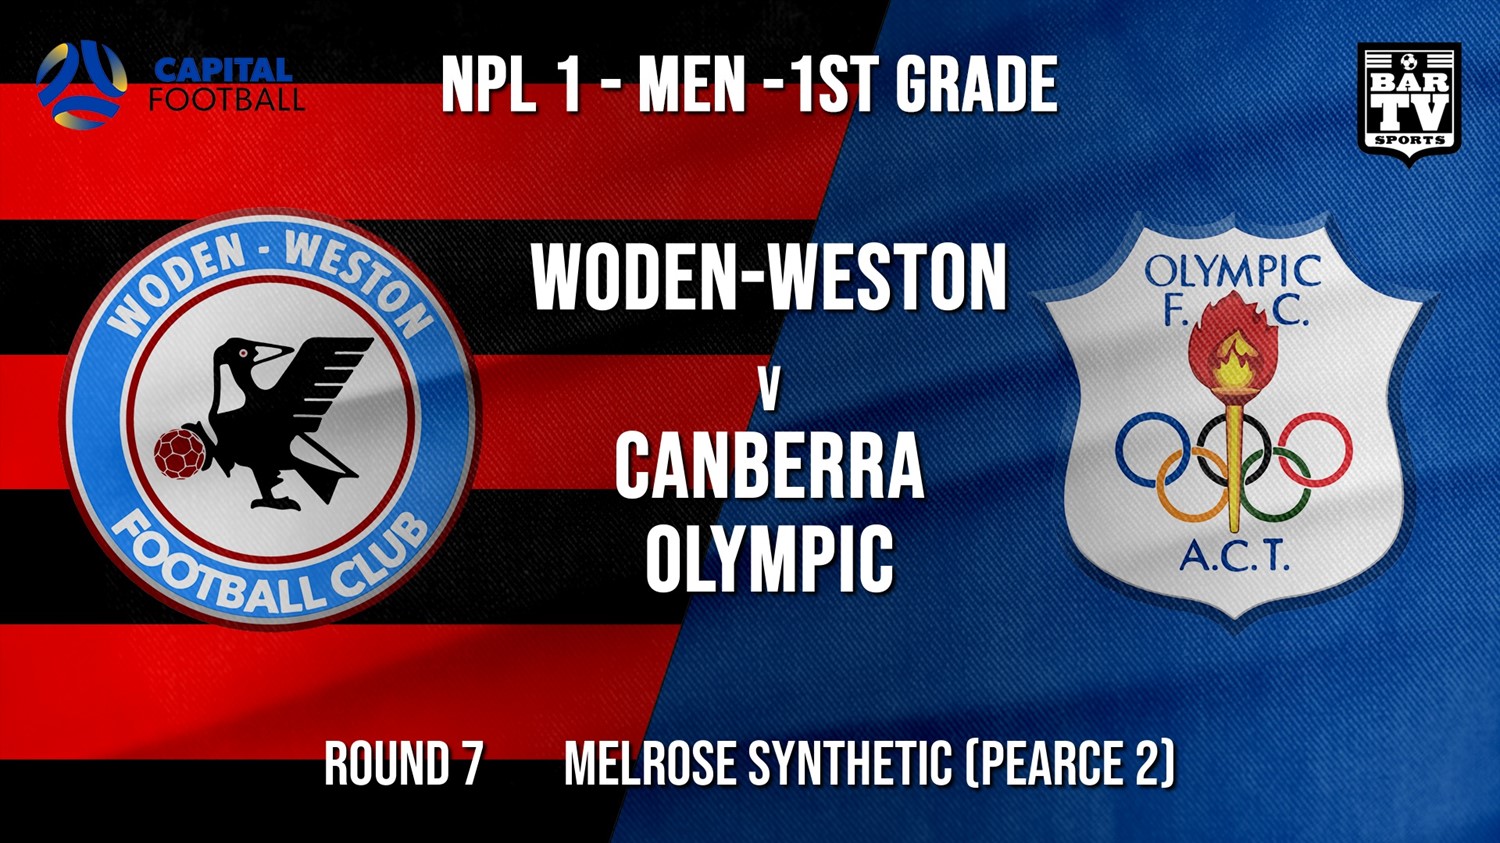 NPL - CAPITAL Round 7 - Woden-Weston FC v Canberra Olympic FC Minigame Slate Image